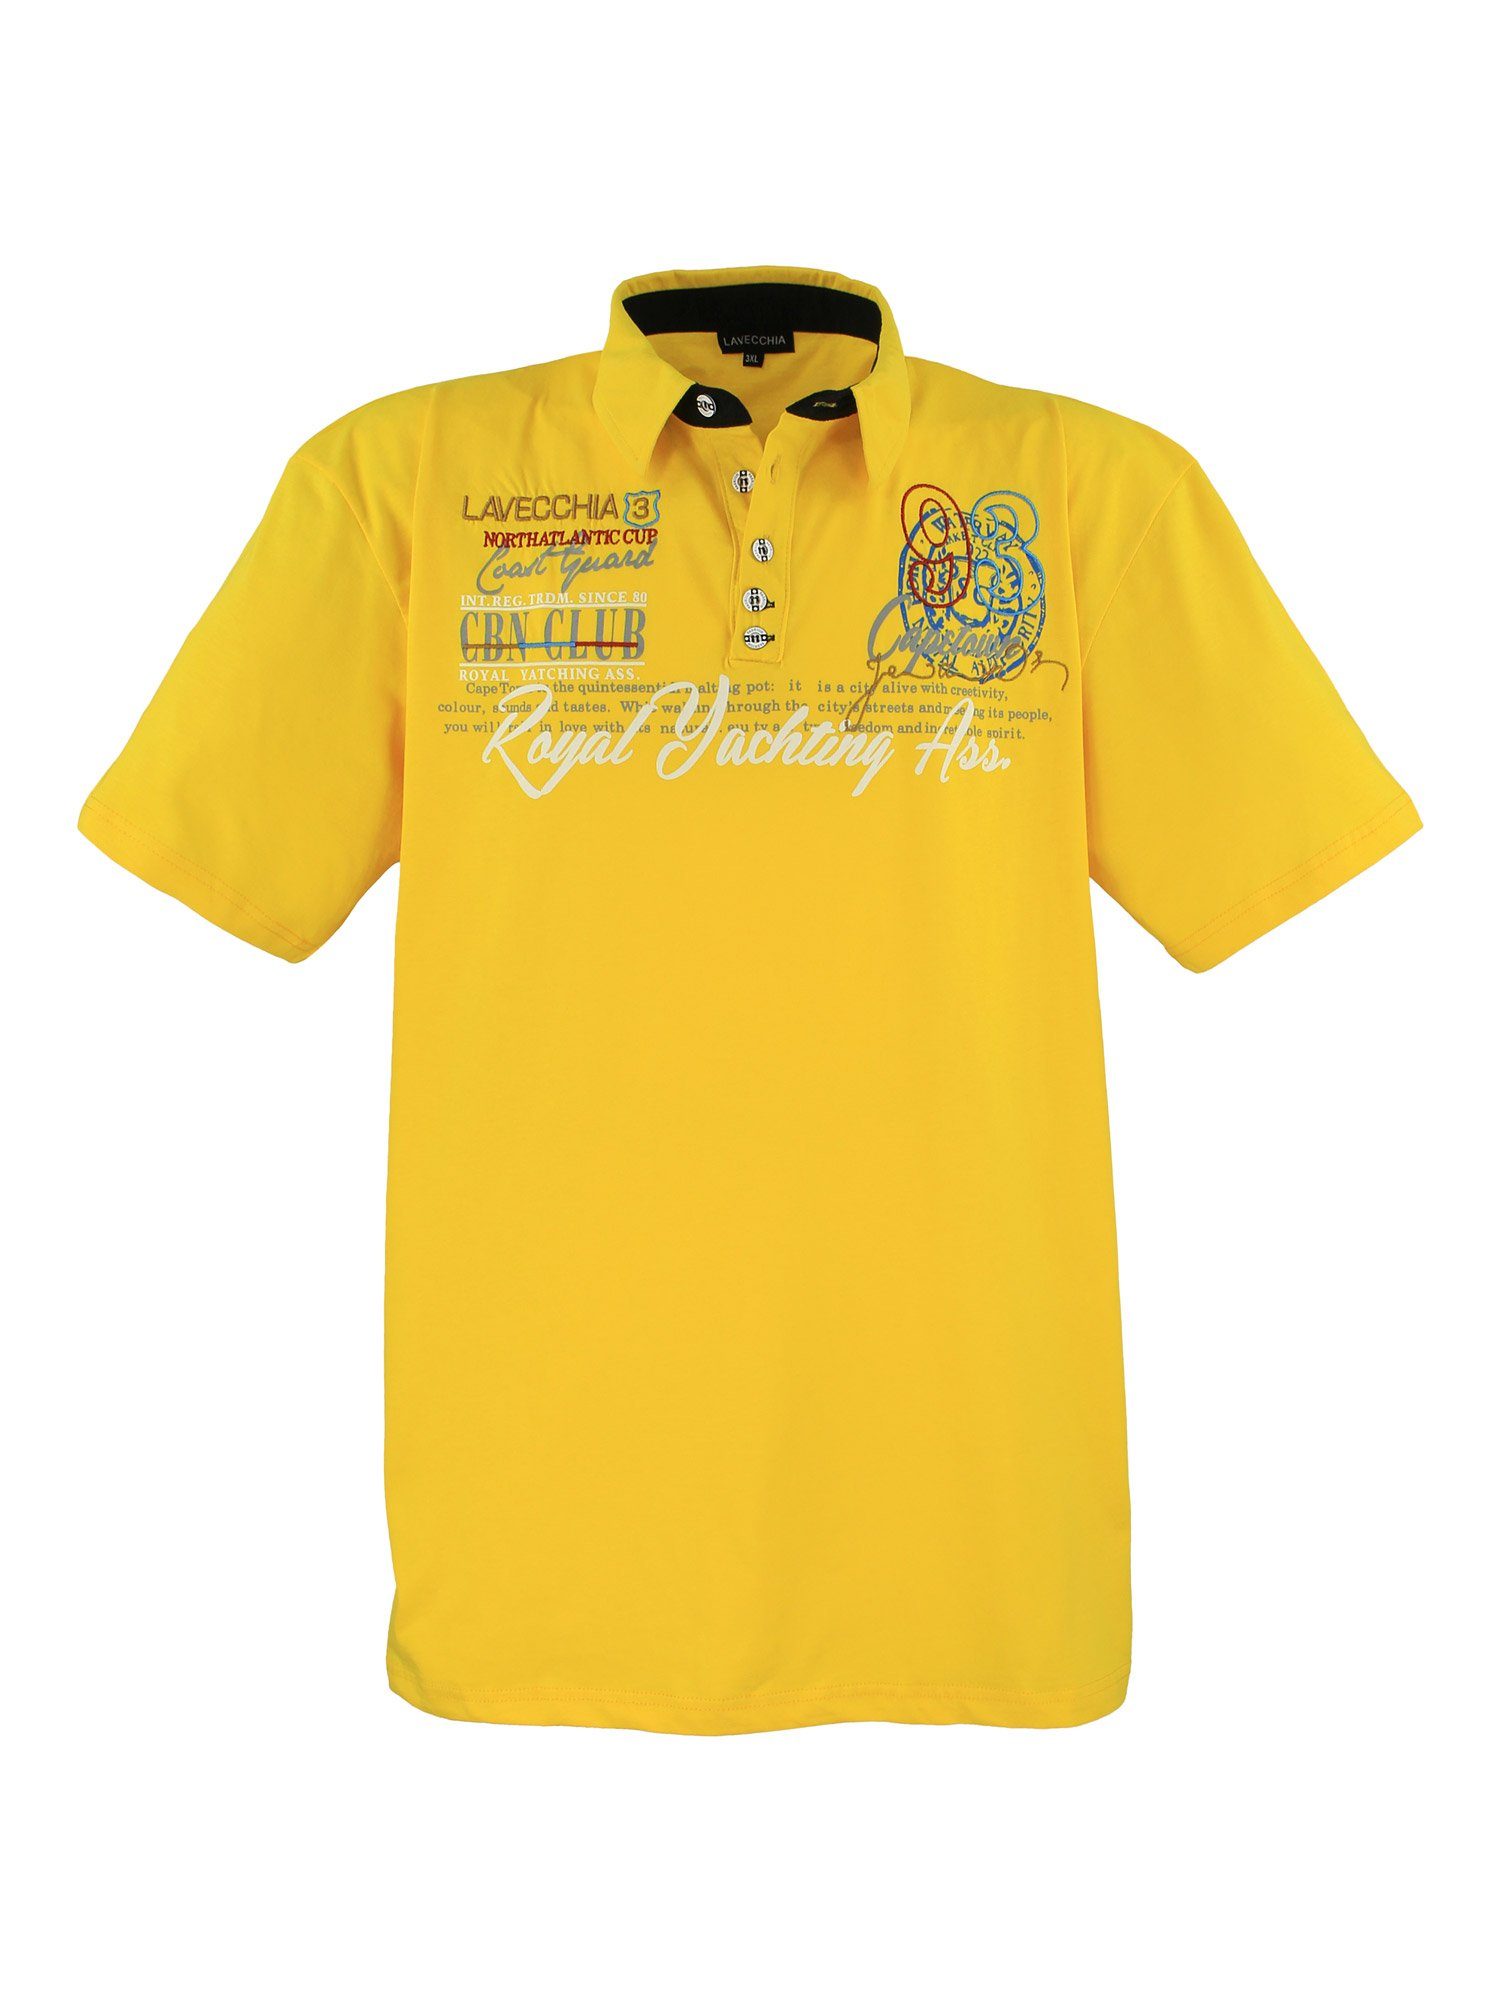 Lavecchia Poloshirt Übergrößen Herren Polo Shirt LV-4688 Herren Polo Shirt gelb